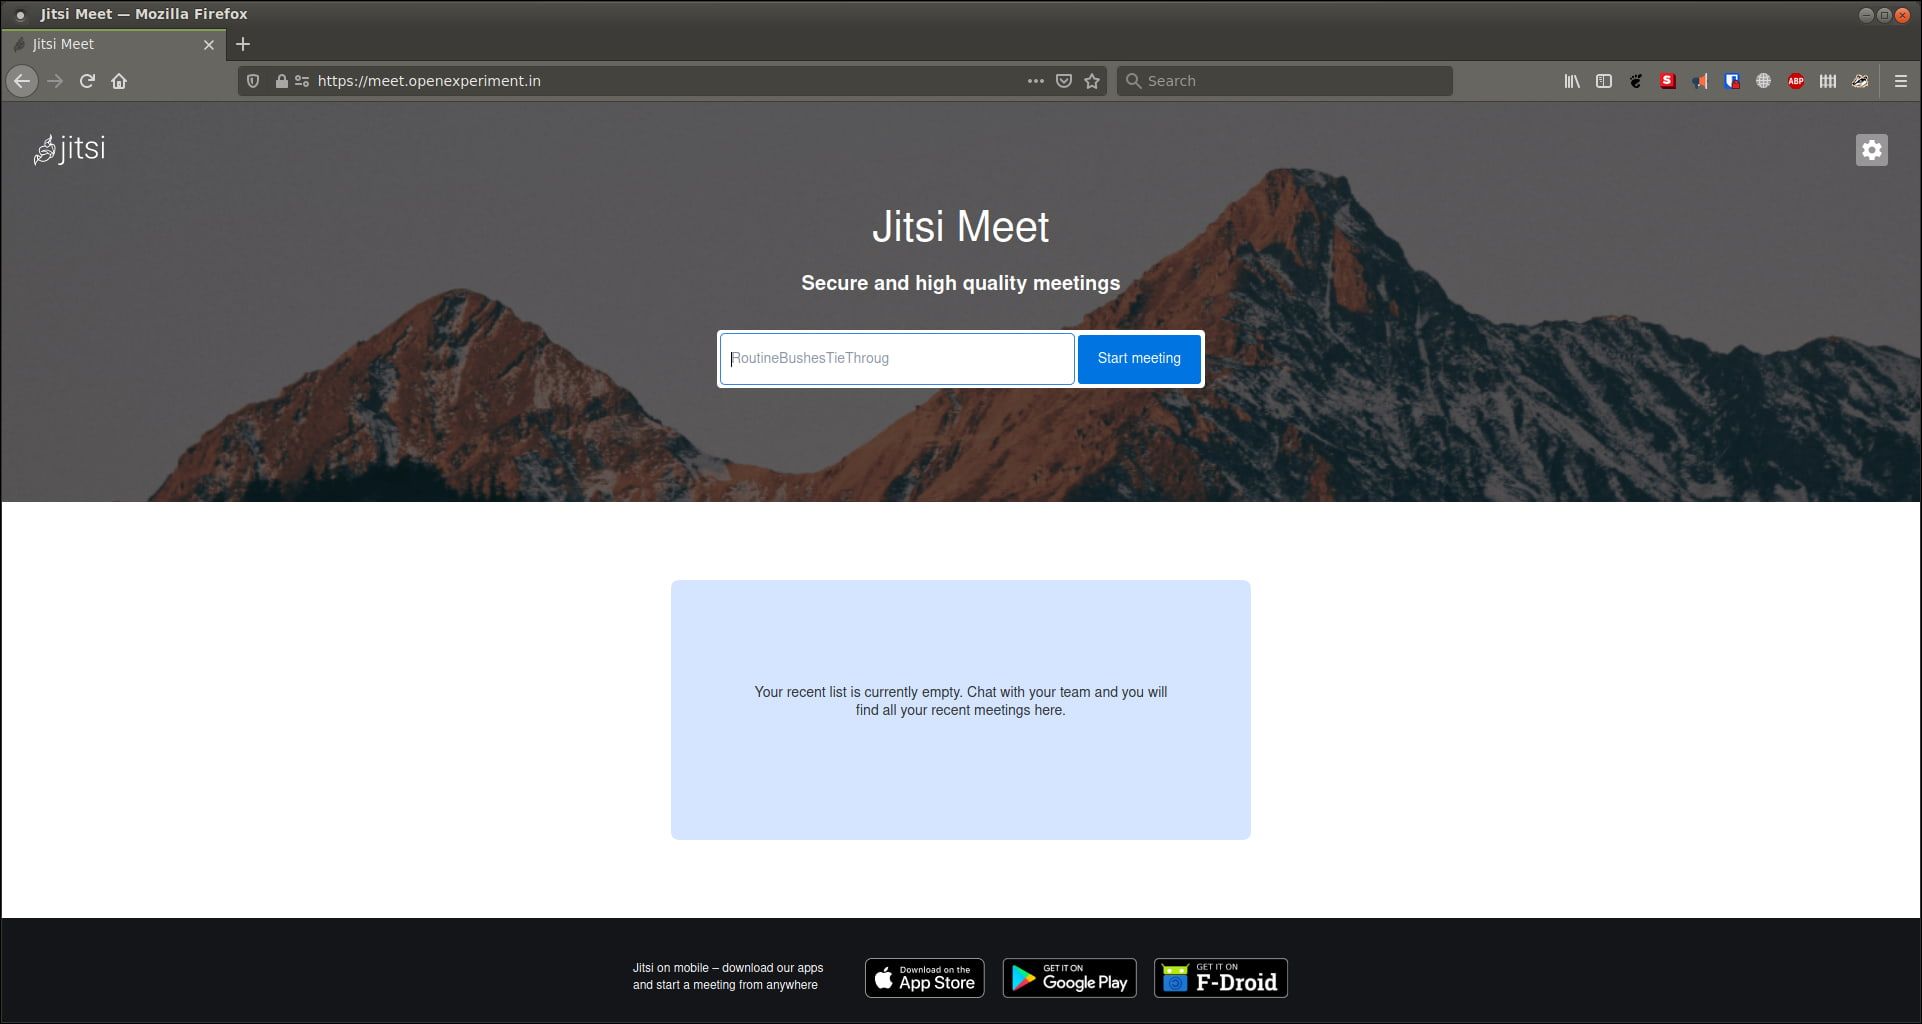 Jitsi Meet home page